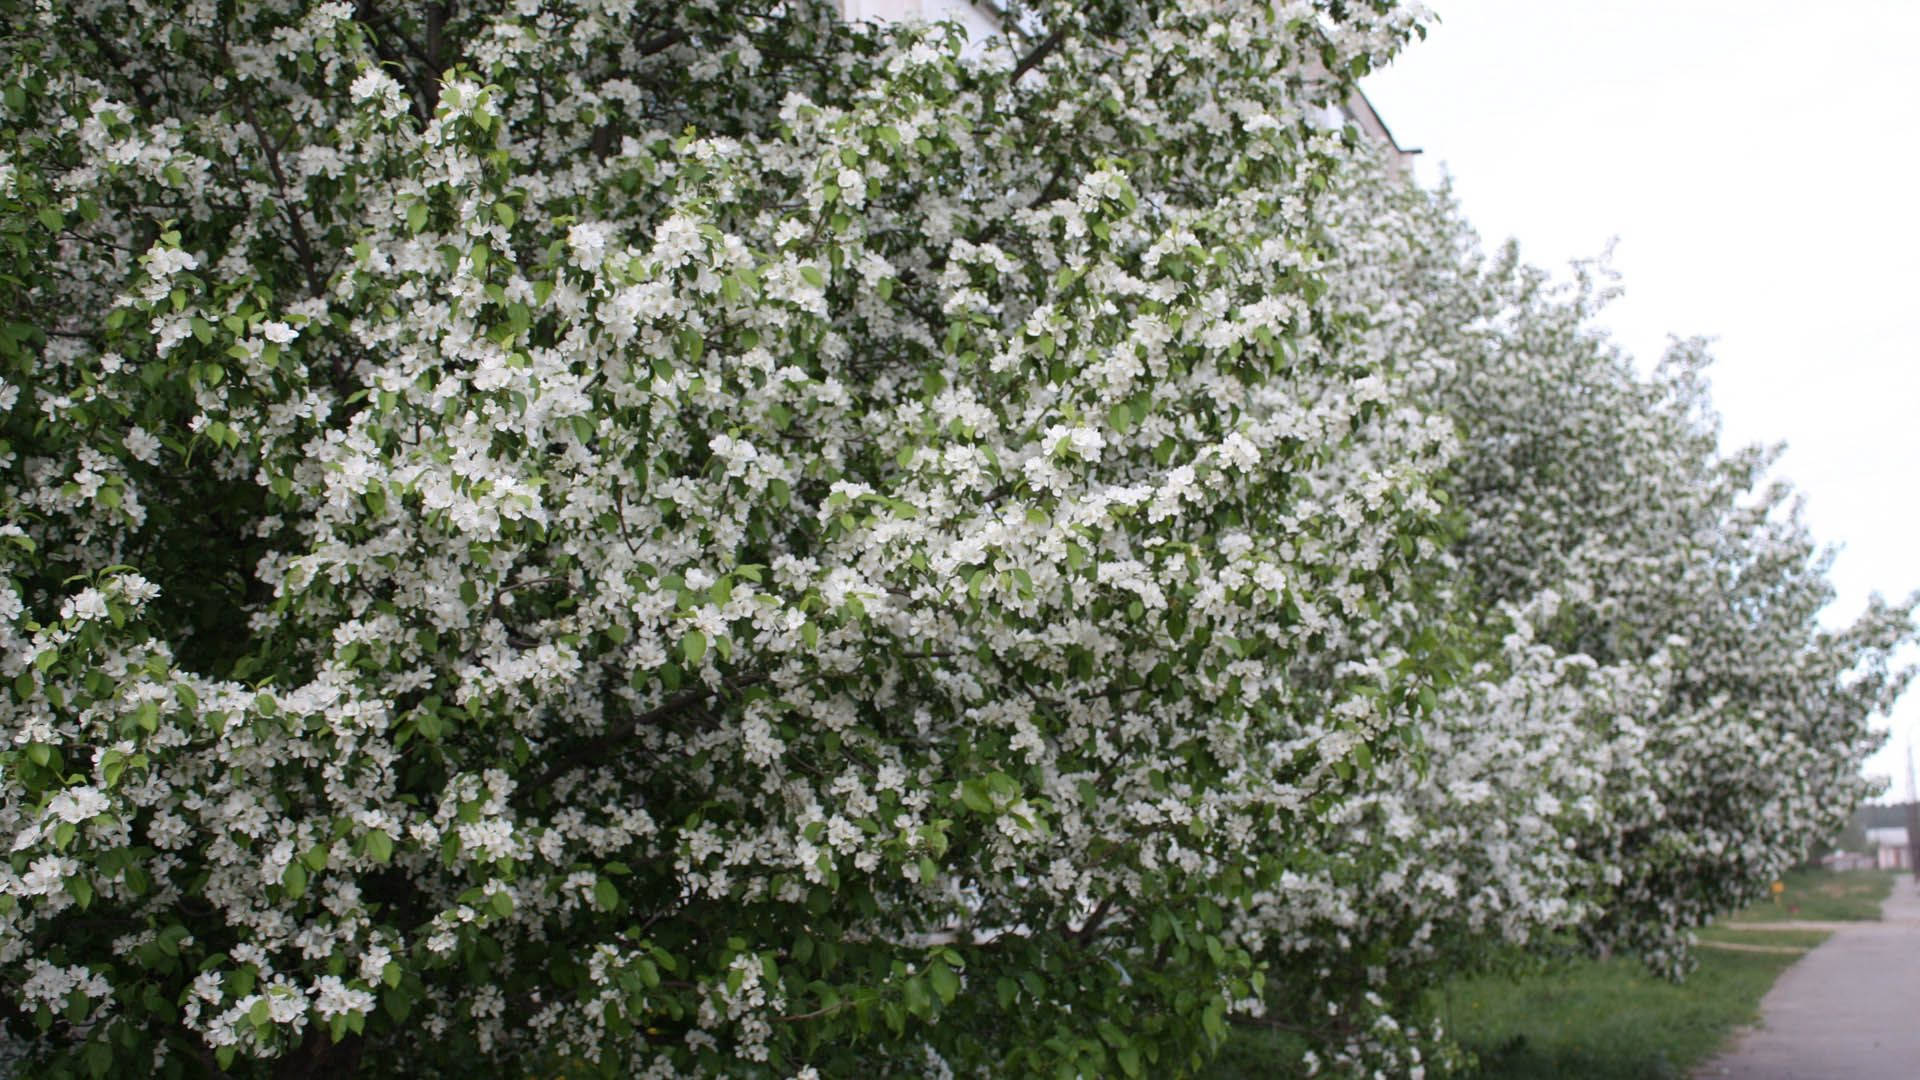 Flowering Spring Trees Wallpaper